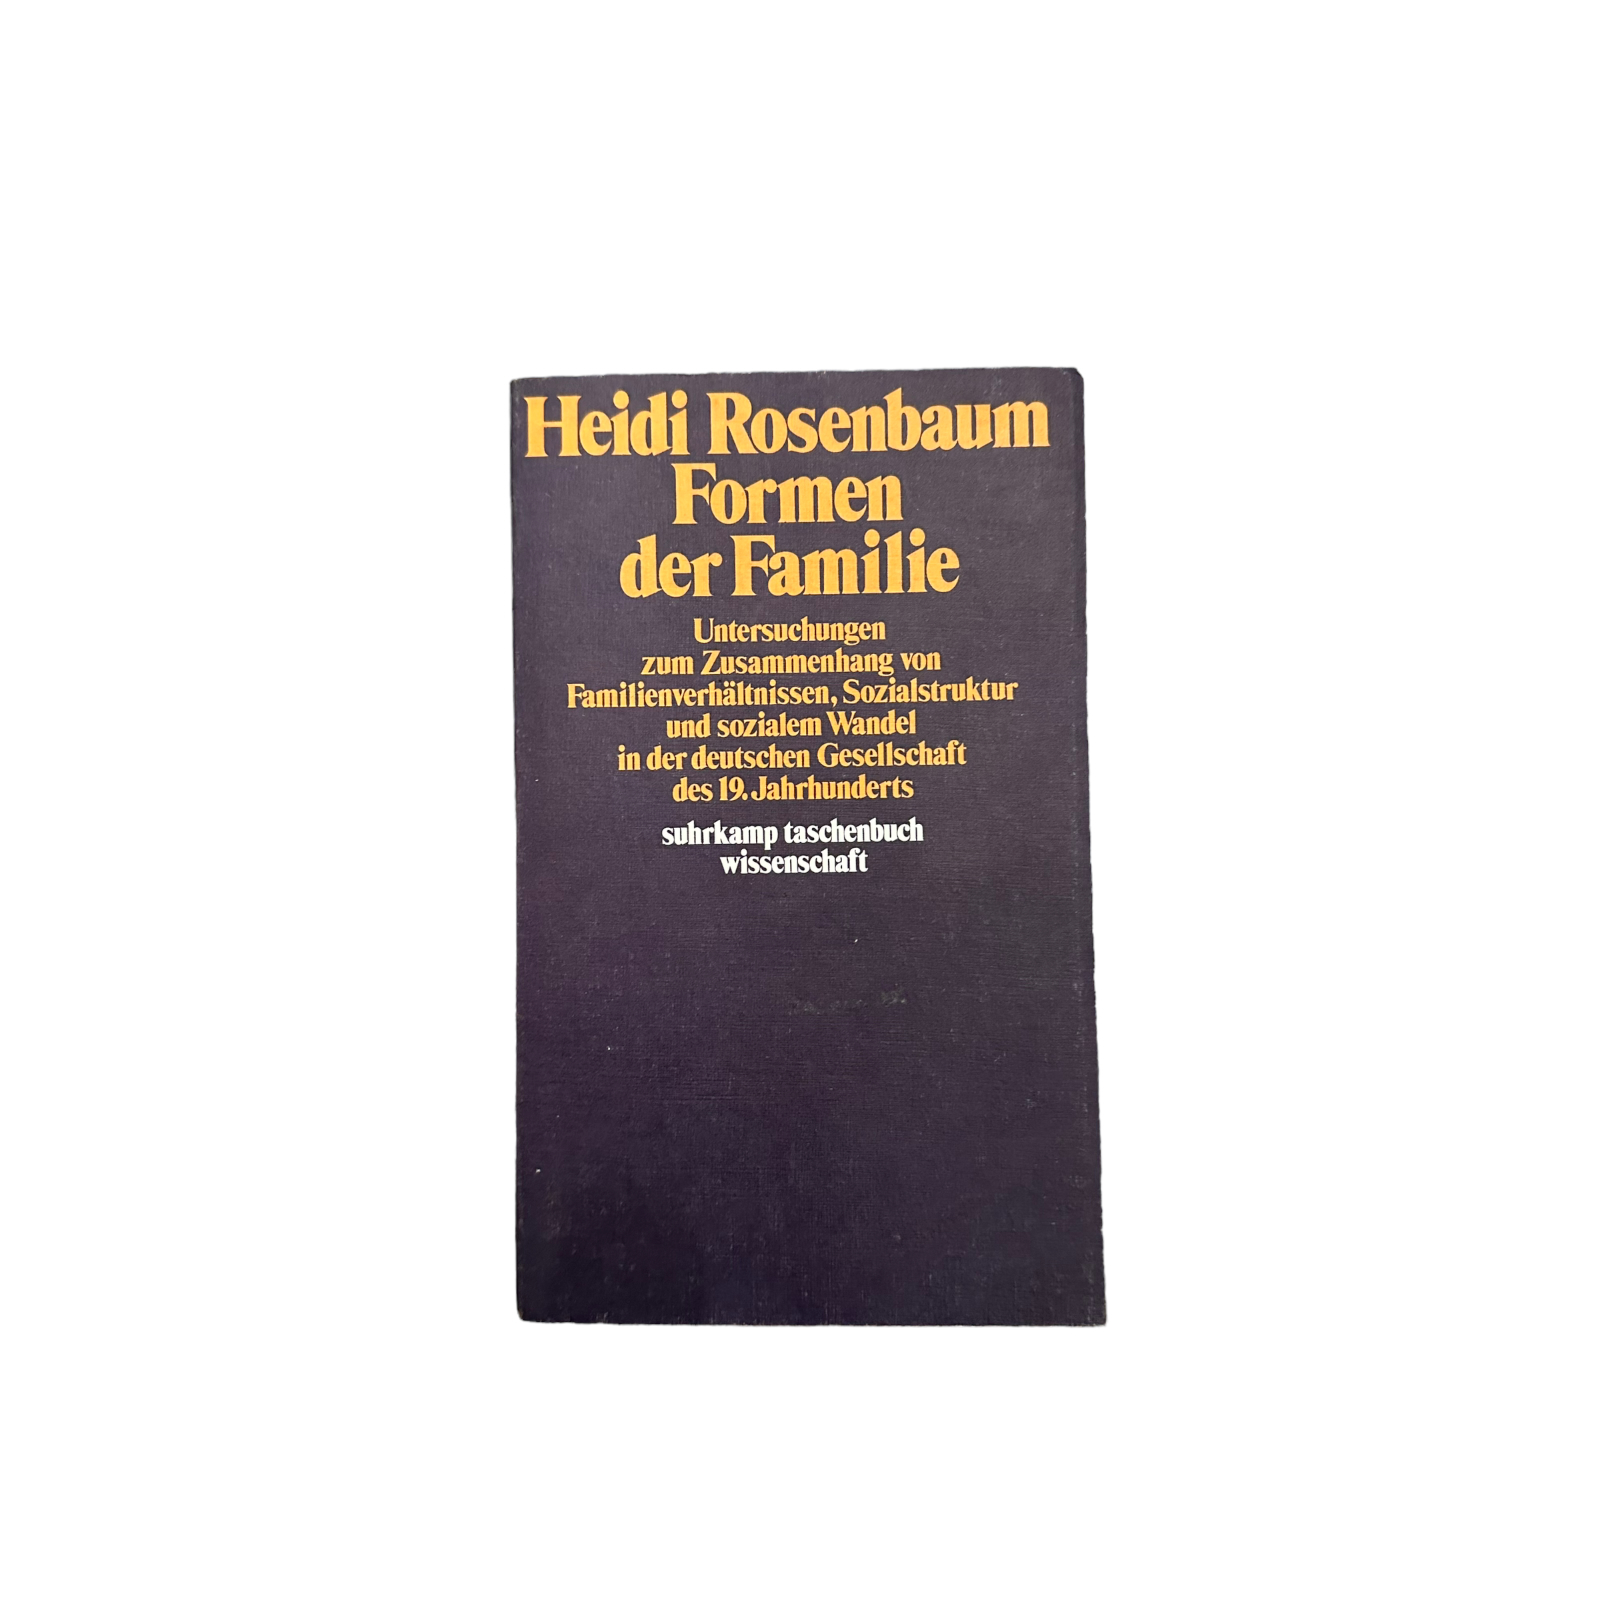 FORMEN DER FAMILIE. - Rosenbaum, Heidi